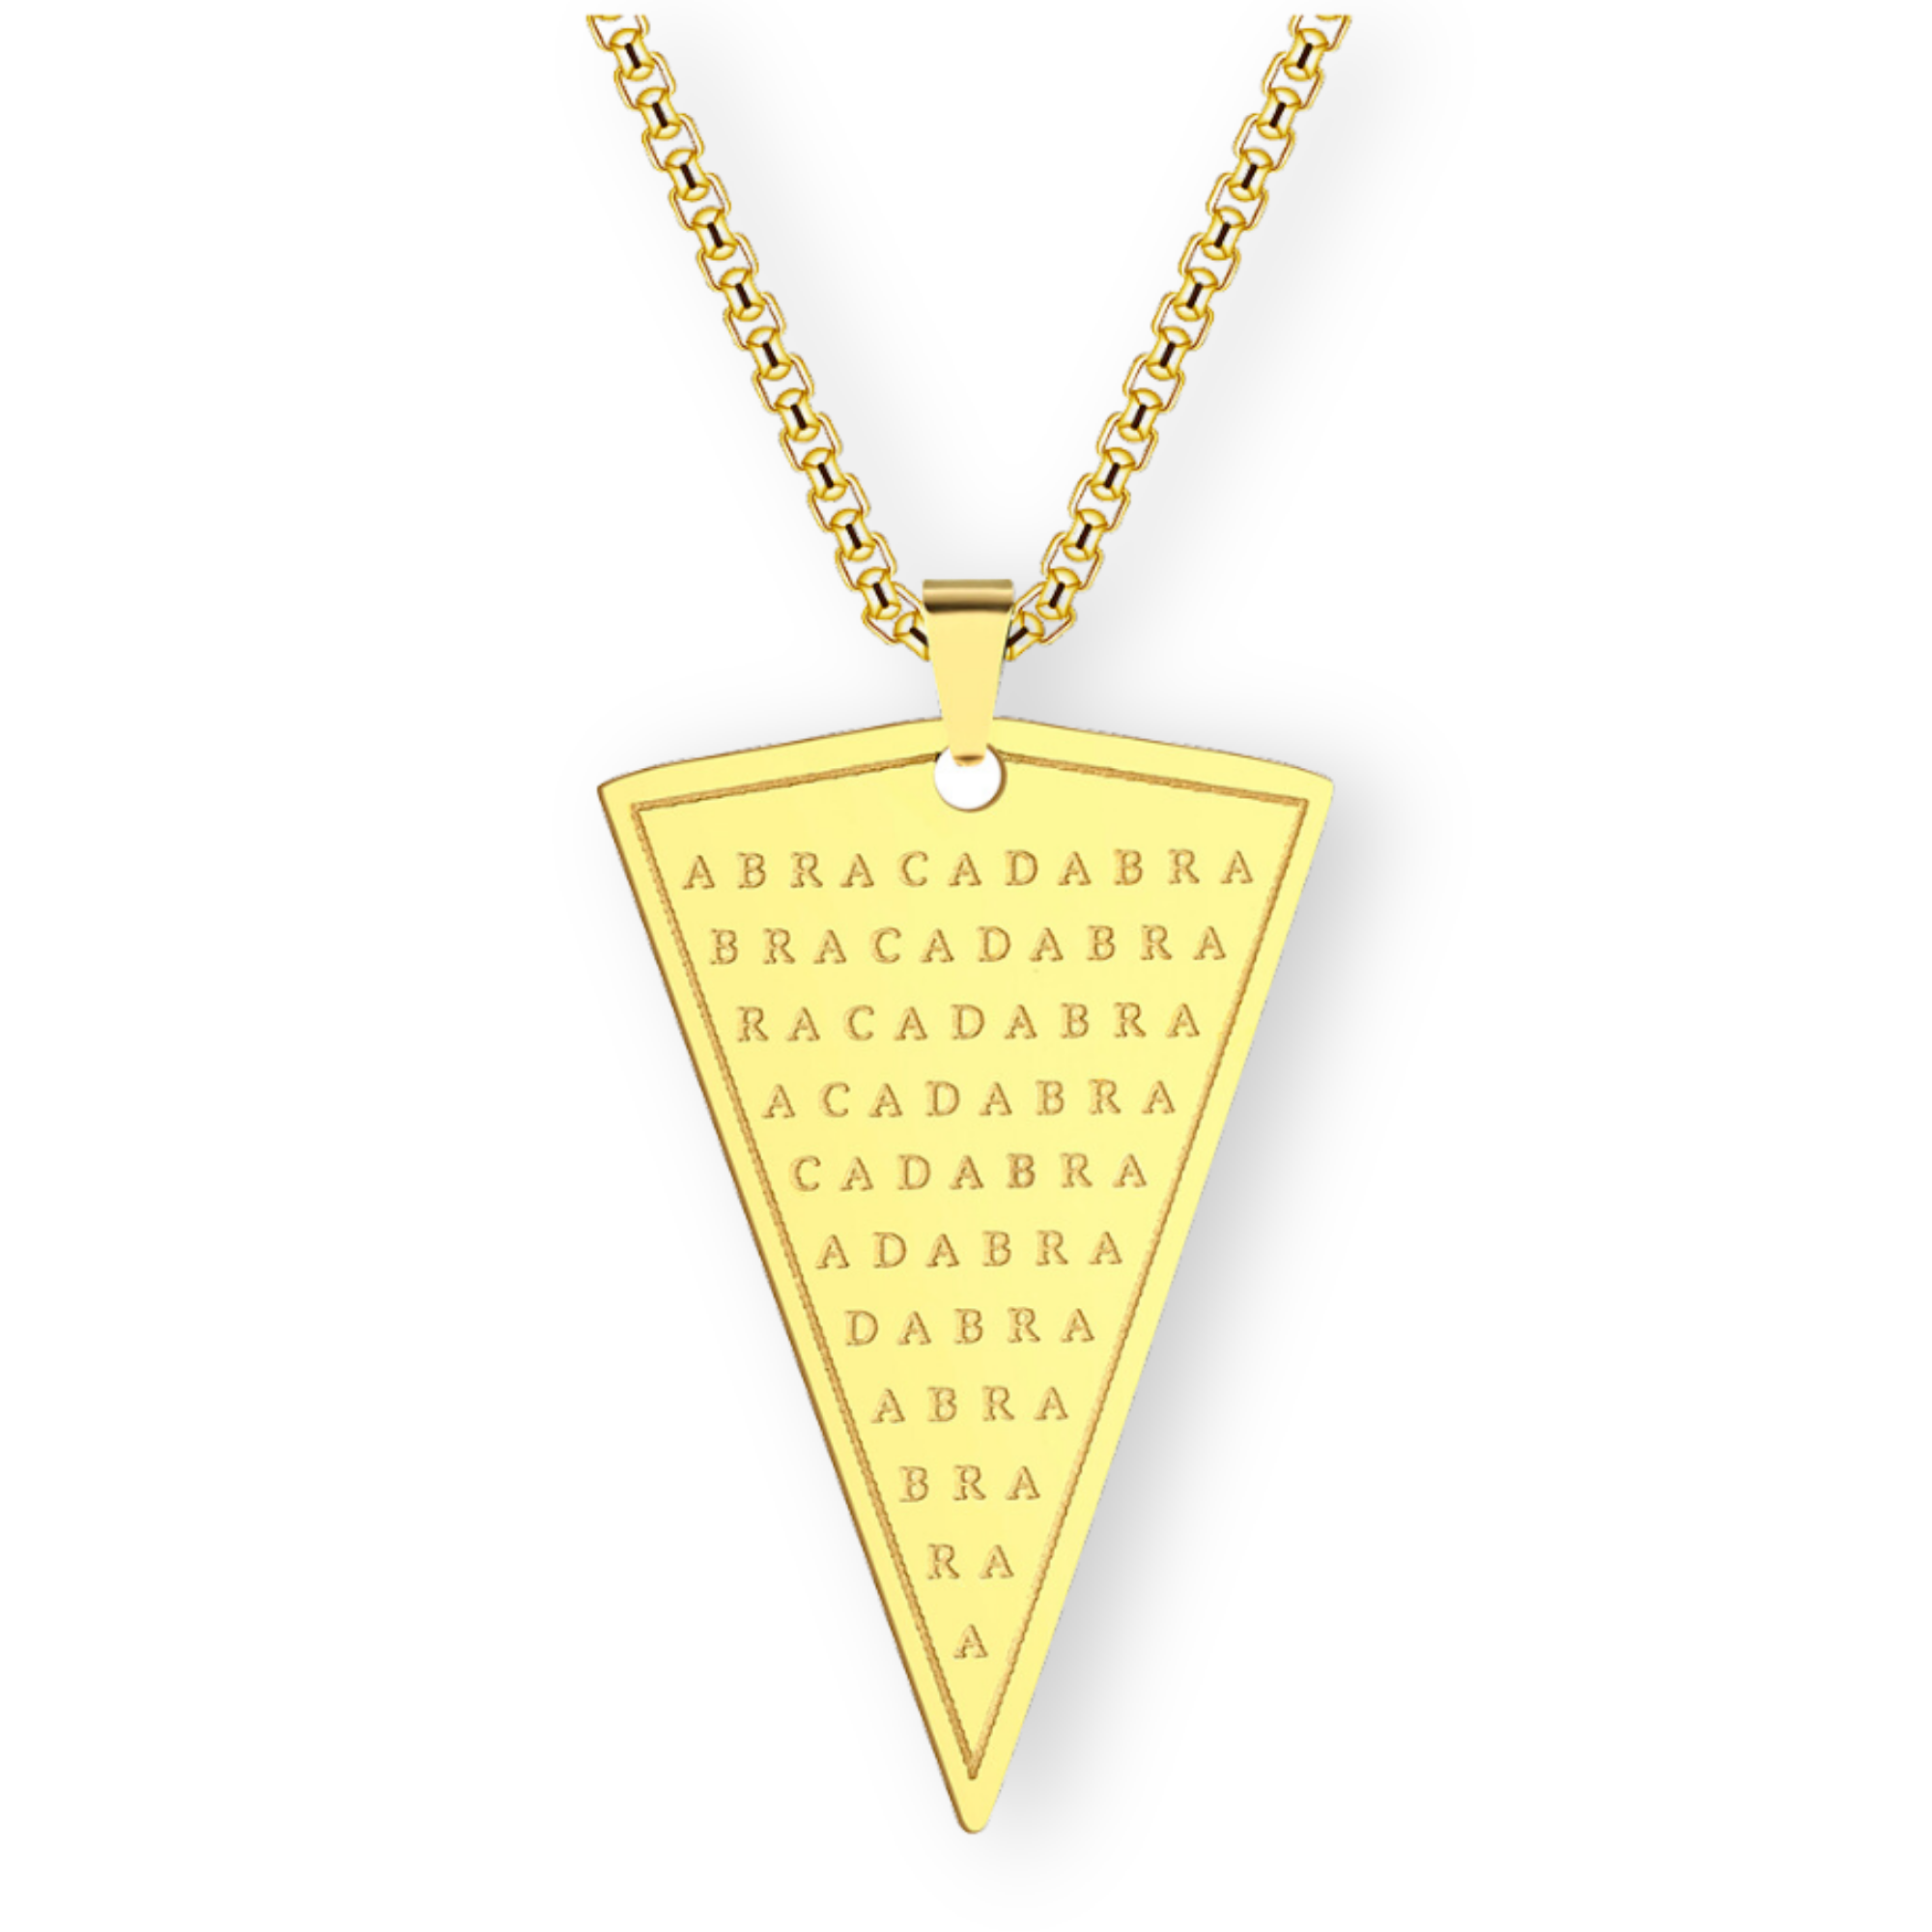 Abracadabra Kabbalah Necklace | Protection Healing Magick Triangle Pendant | Esoteric Unisex Cabbalist Occult Amulet Jewelry | Apollo Tarot Shop